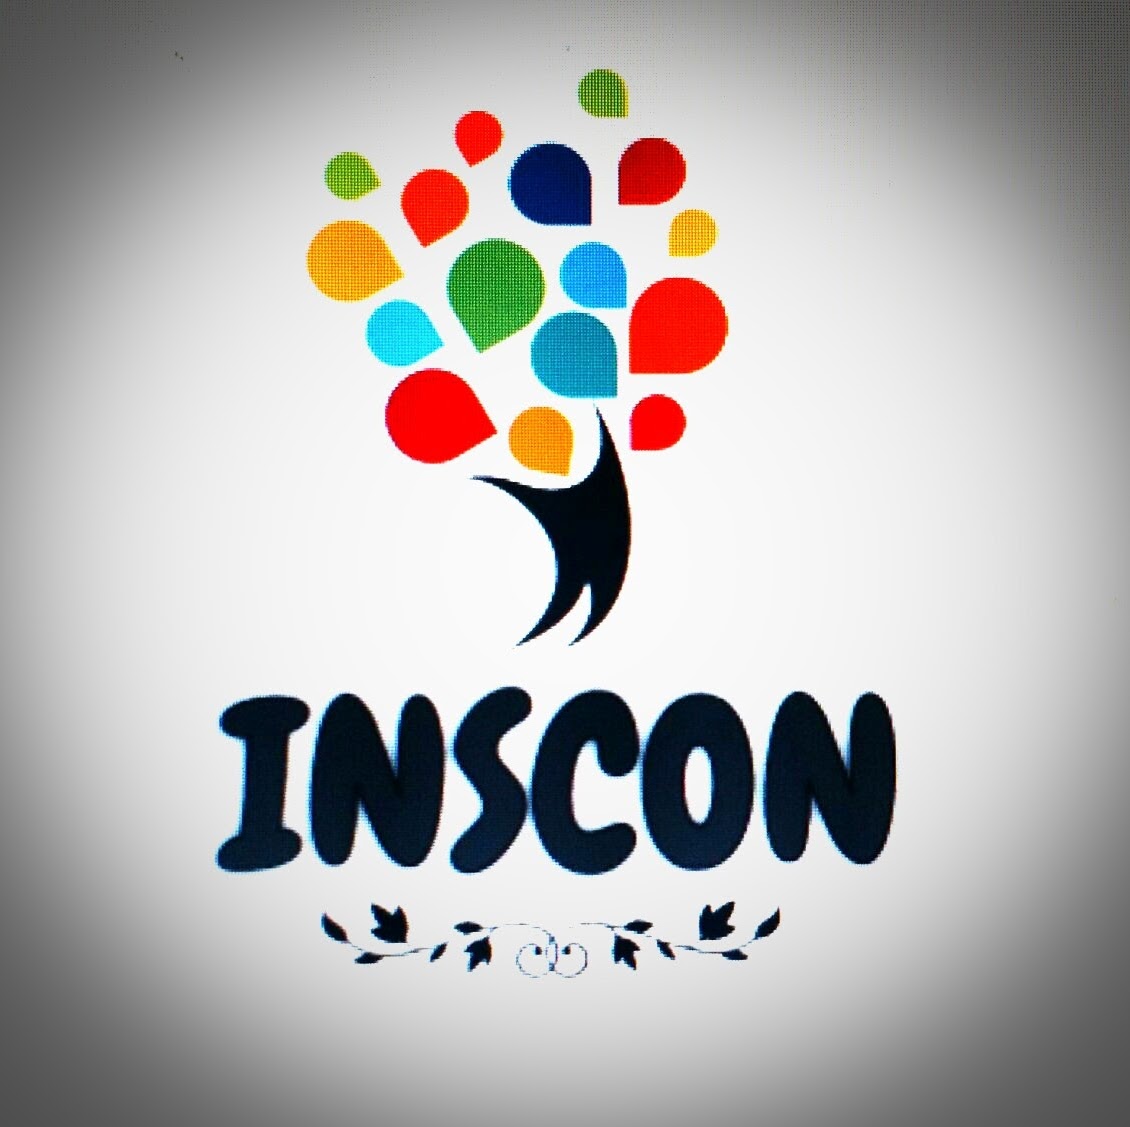 Inscon 2K17